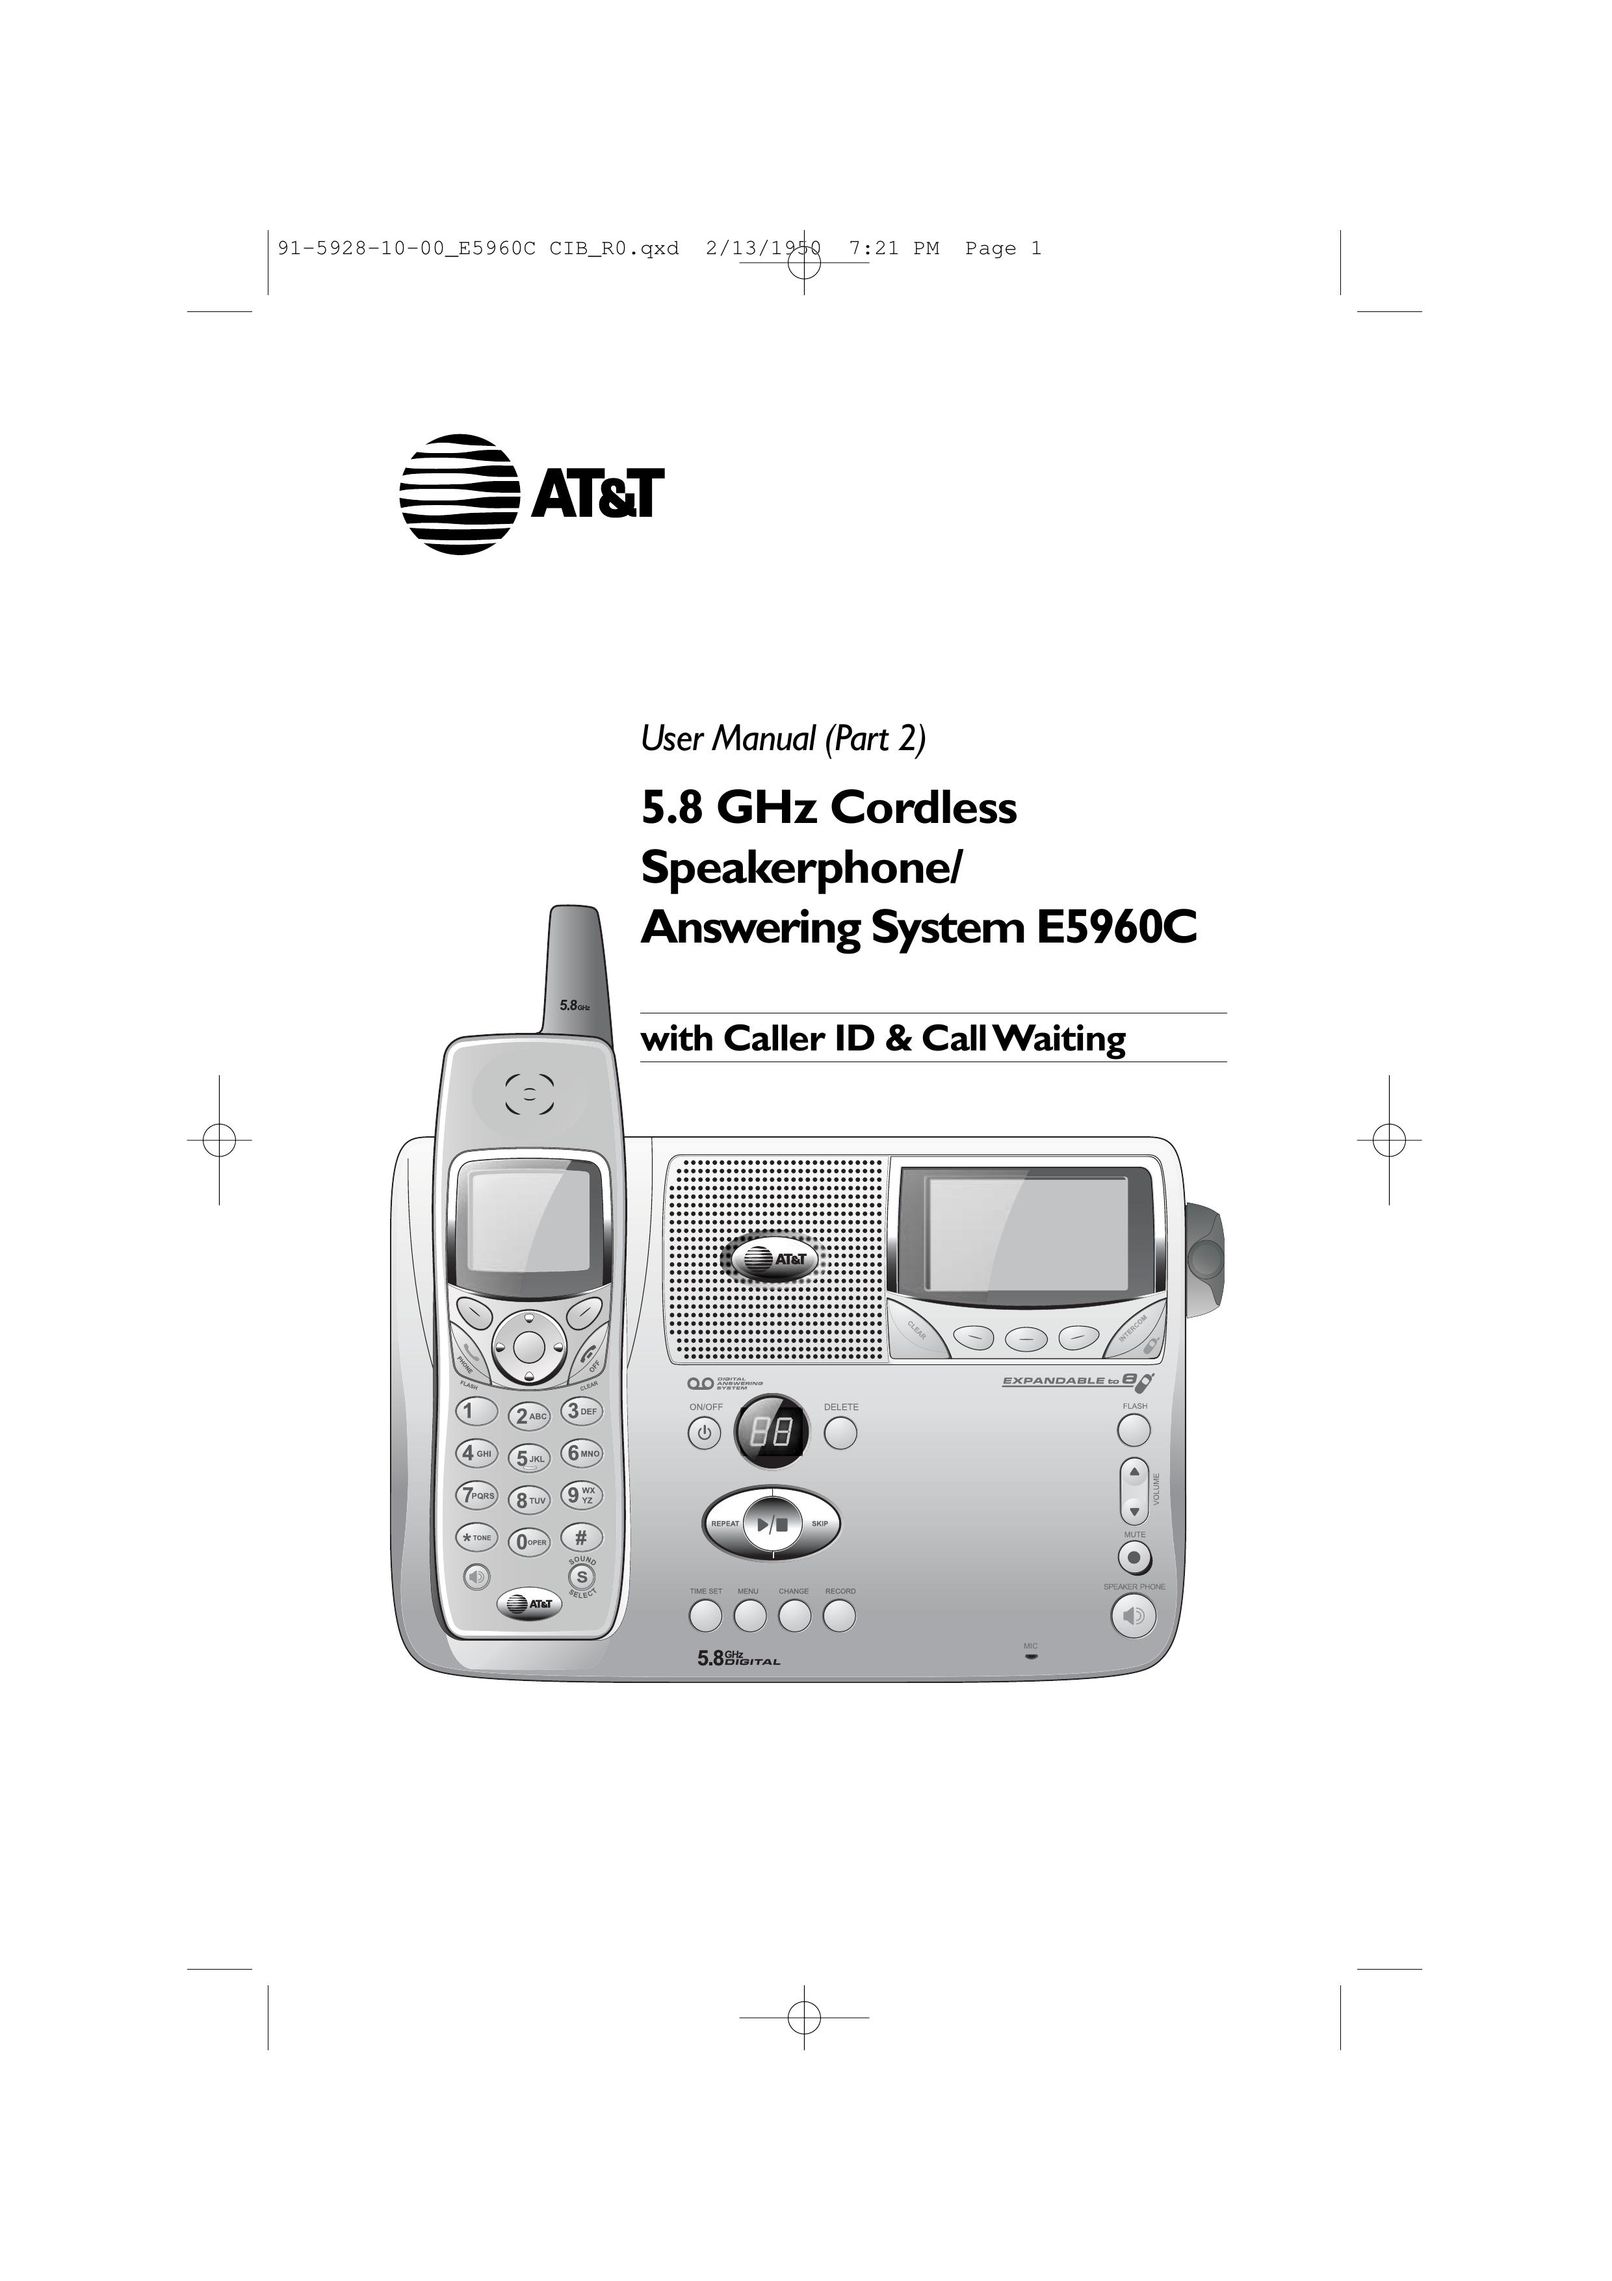 AT&T E5960 Answering Machine User Manual